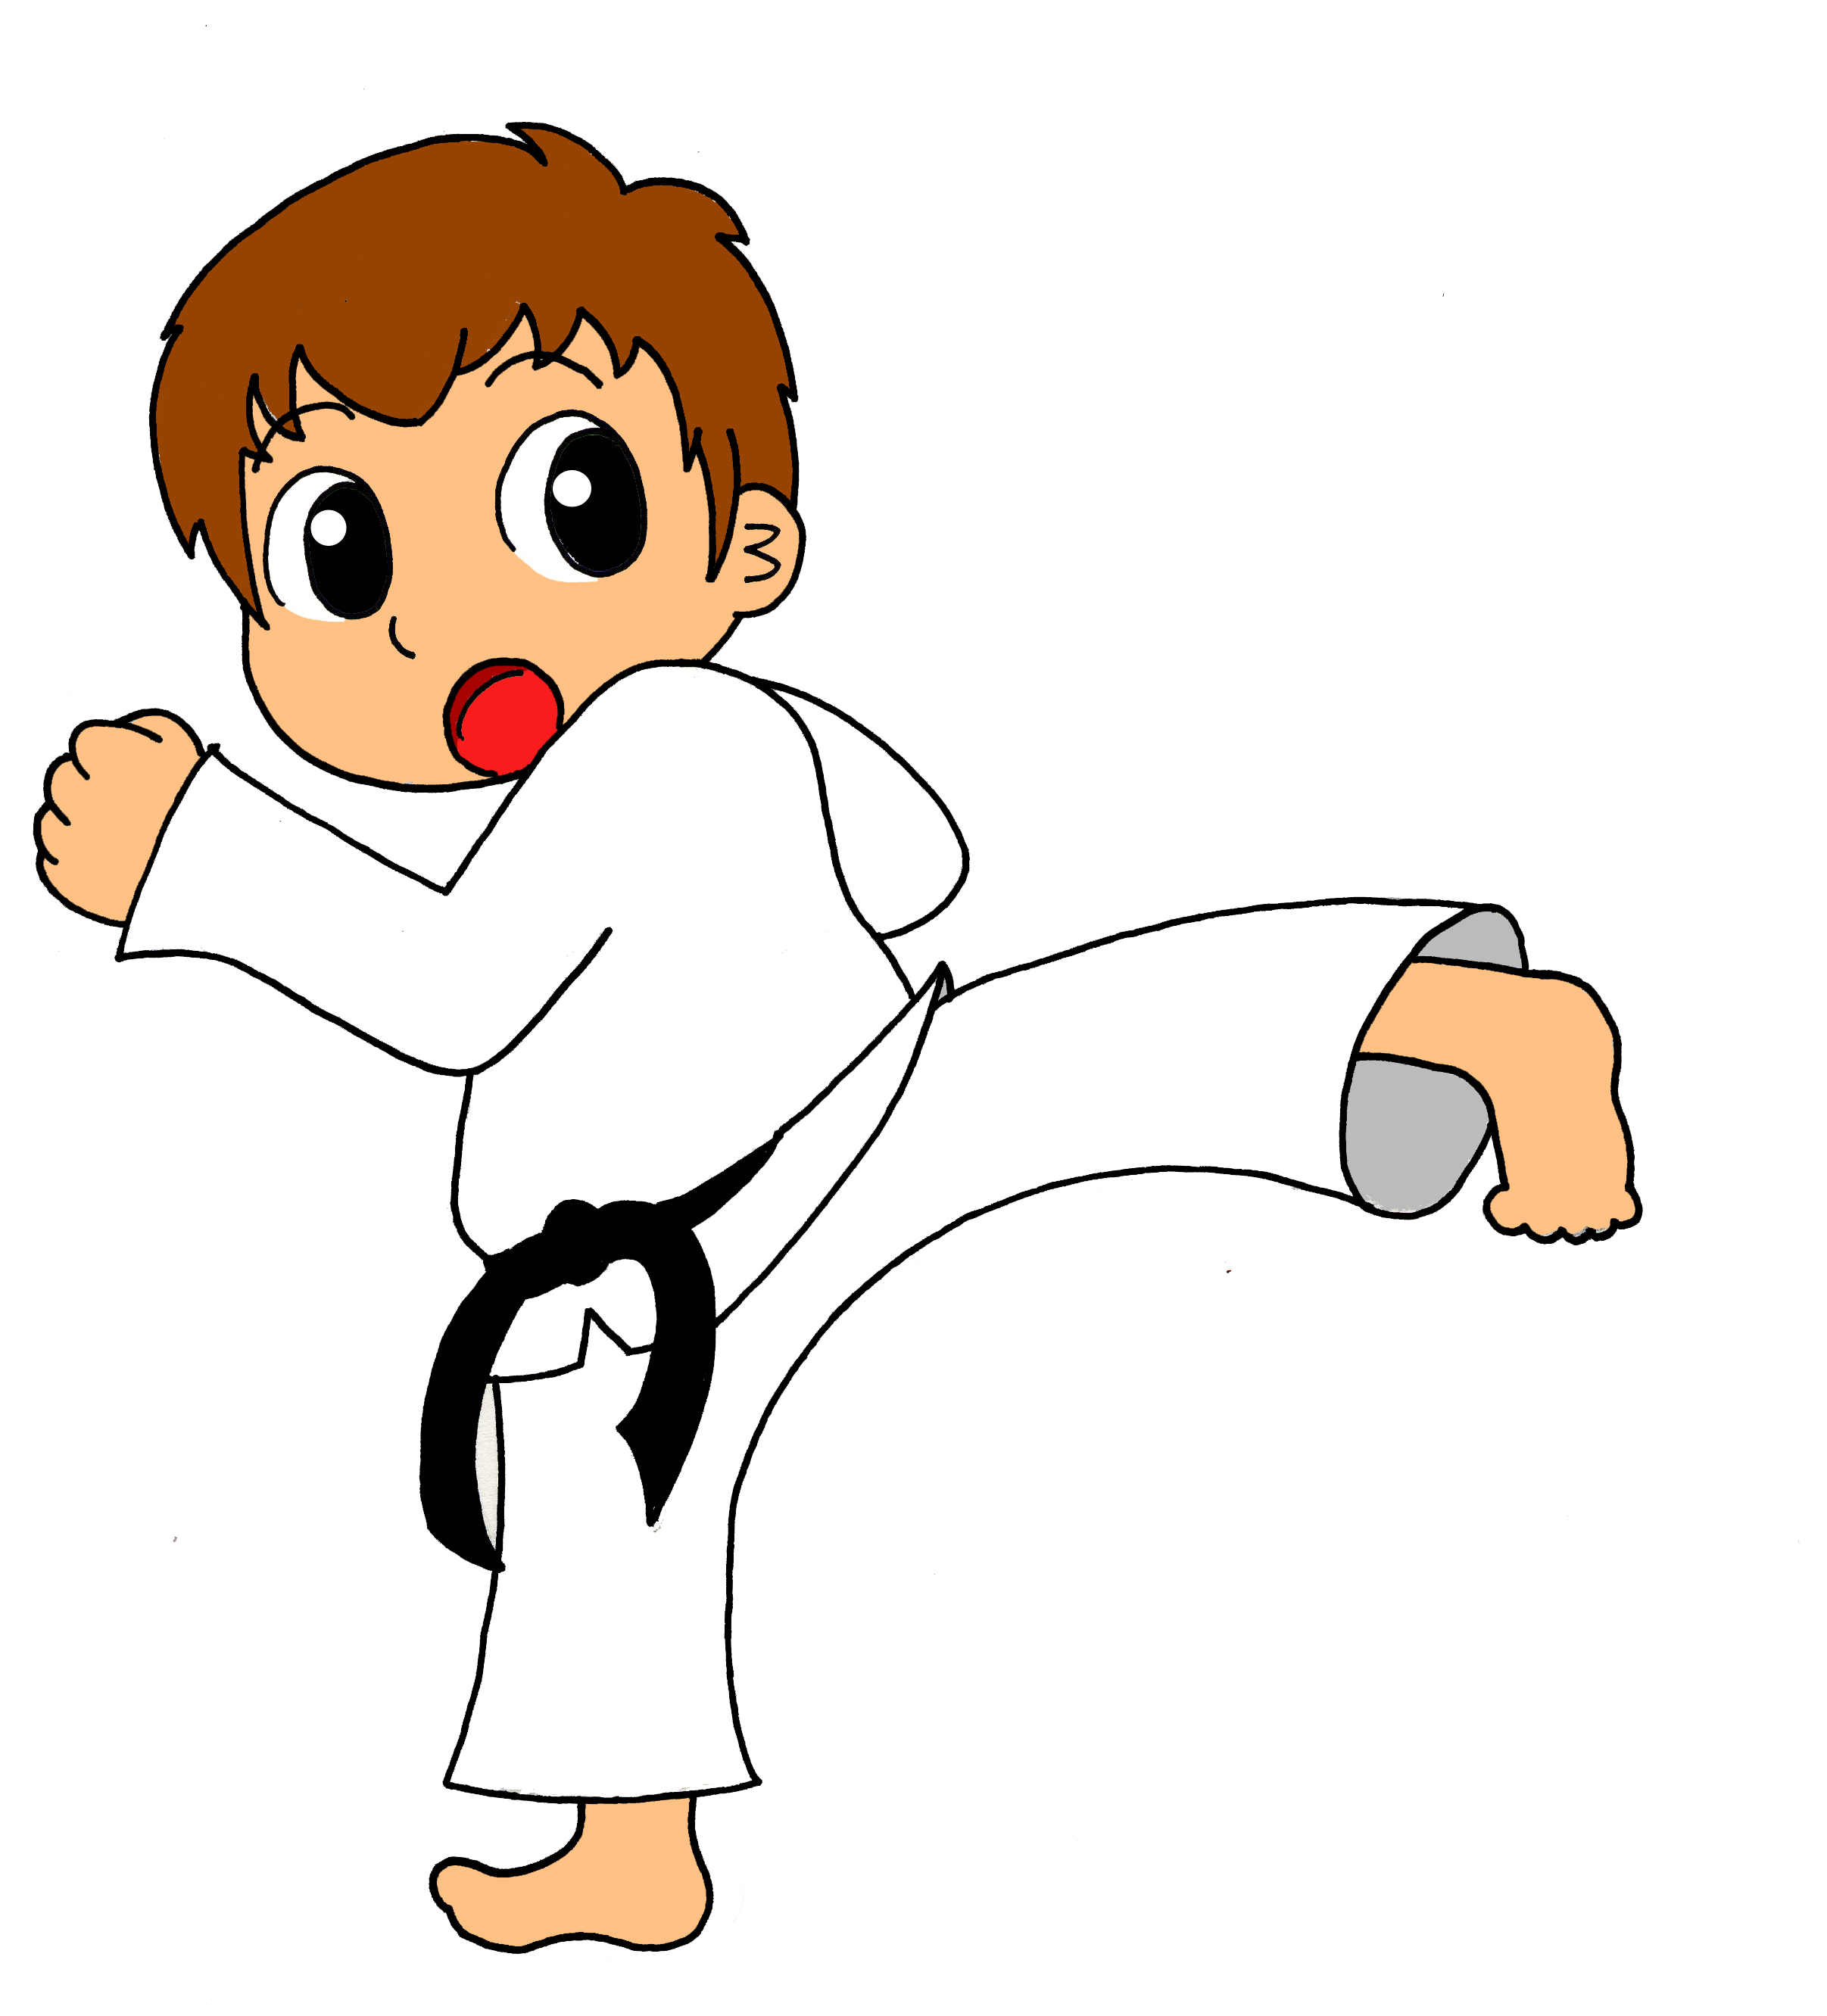 Pictures Taekwondo Videos Taekwondo Video Codes Taekwondo Vid Clips